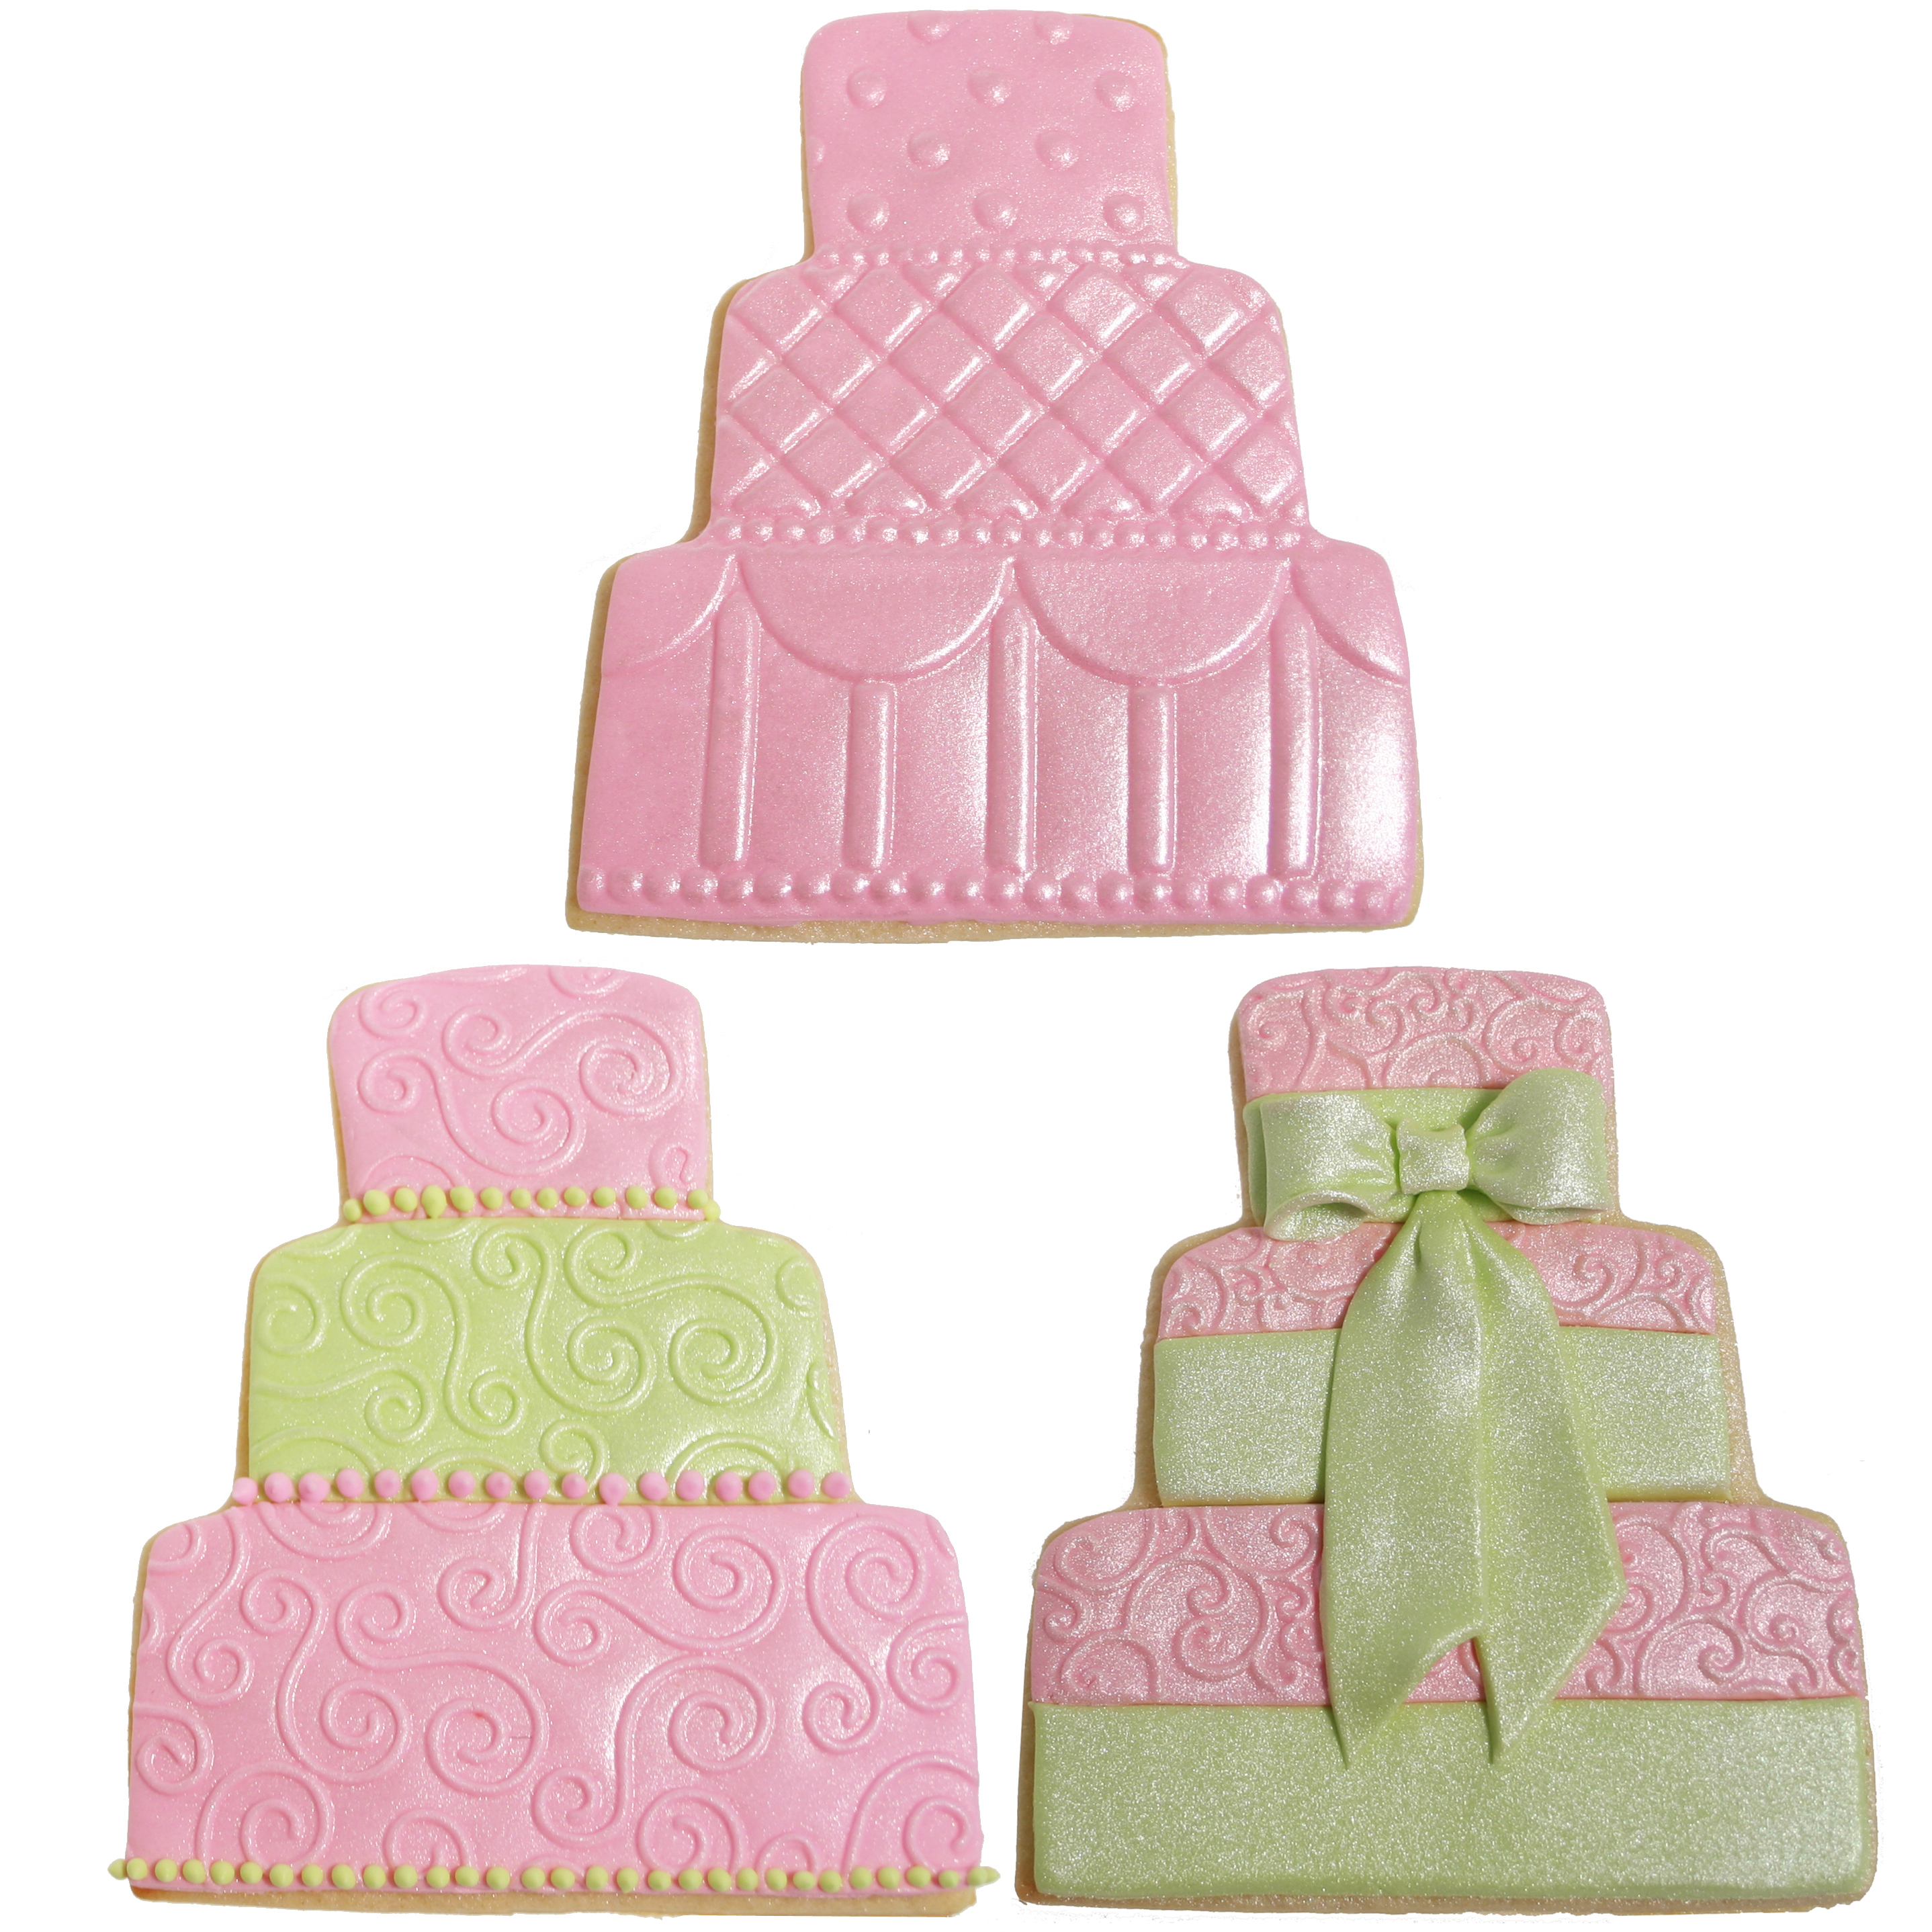 Pink green wedding cakes